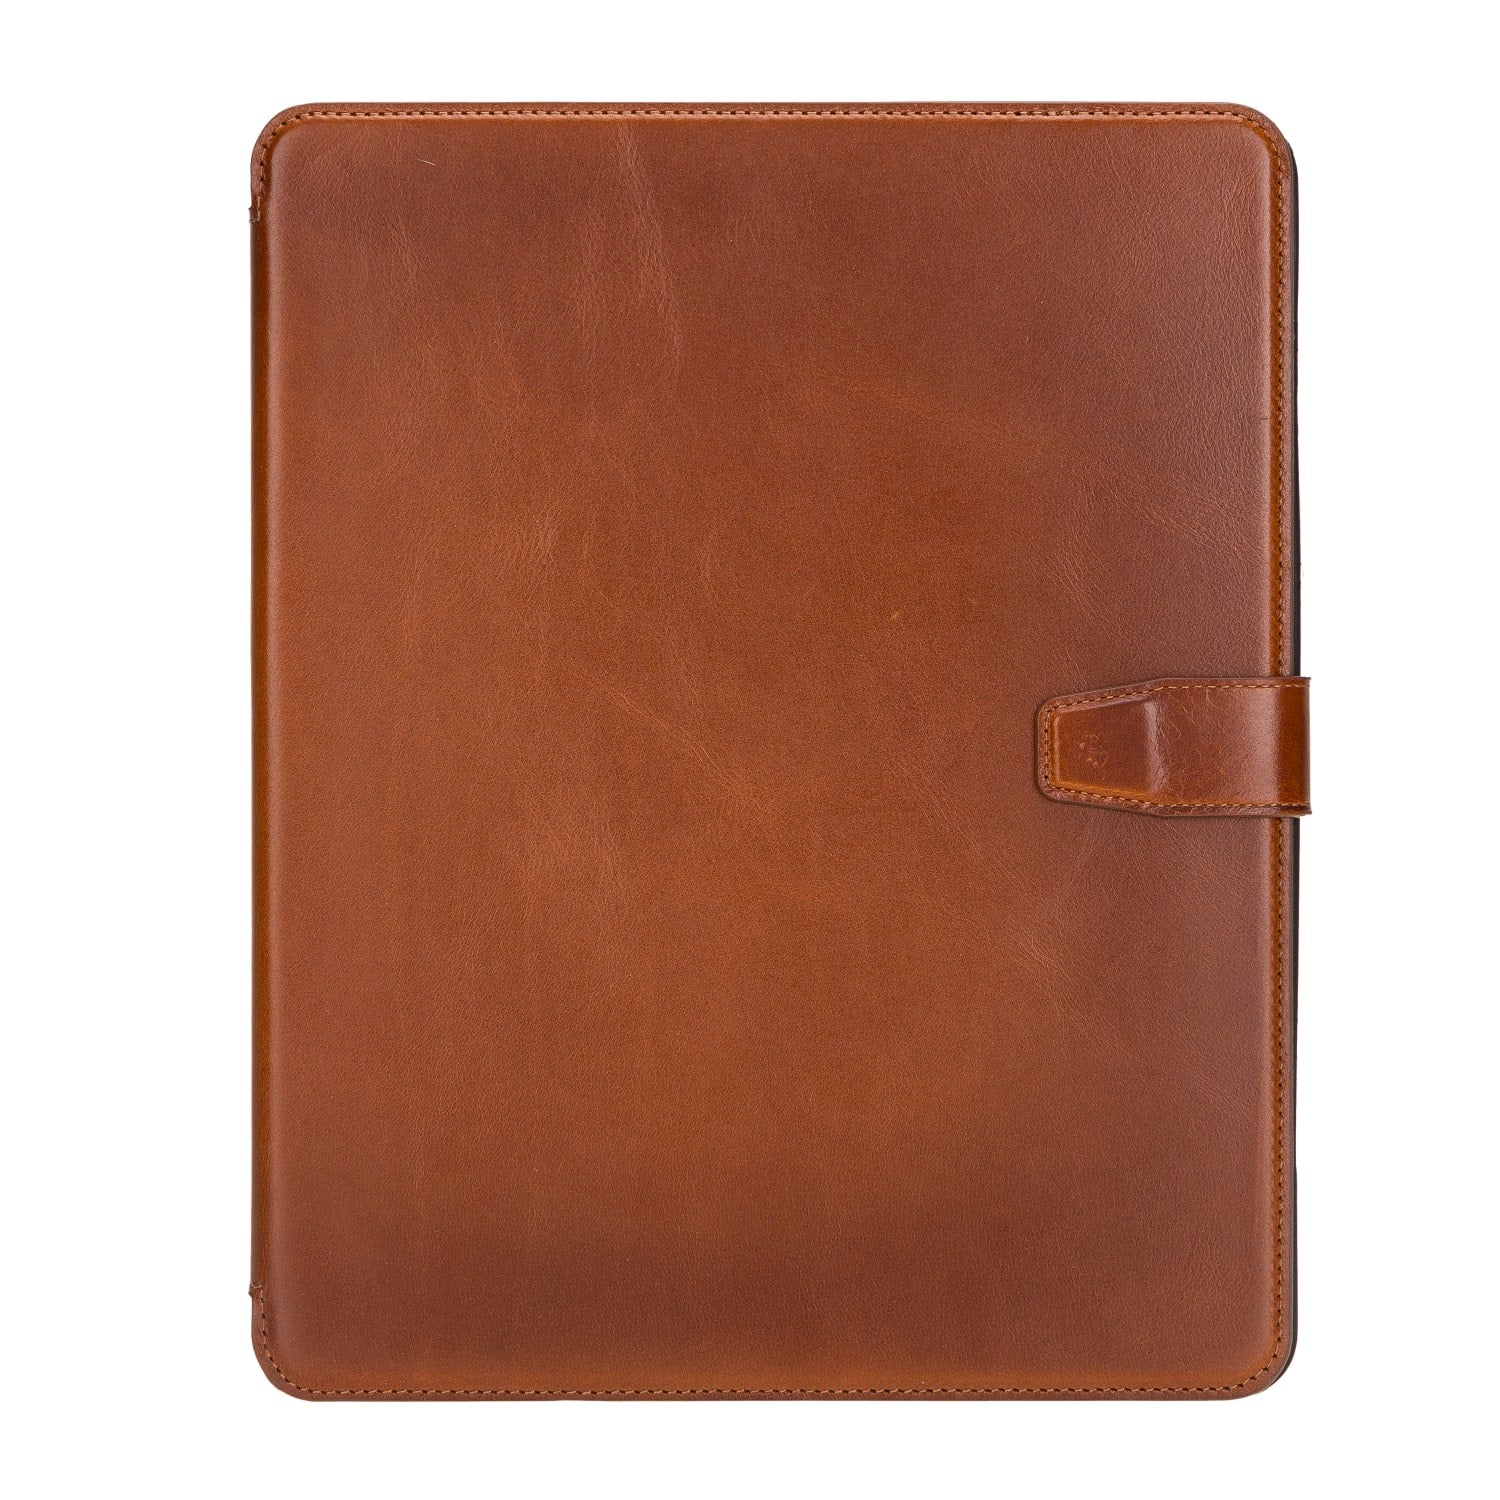 Brown Leather iPad Pro 12.9 Inc Smart Folio Case with Apple Pen Holder - Bomonti - 3